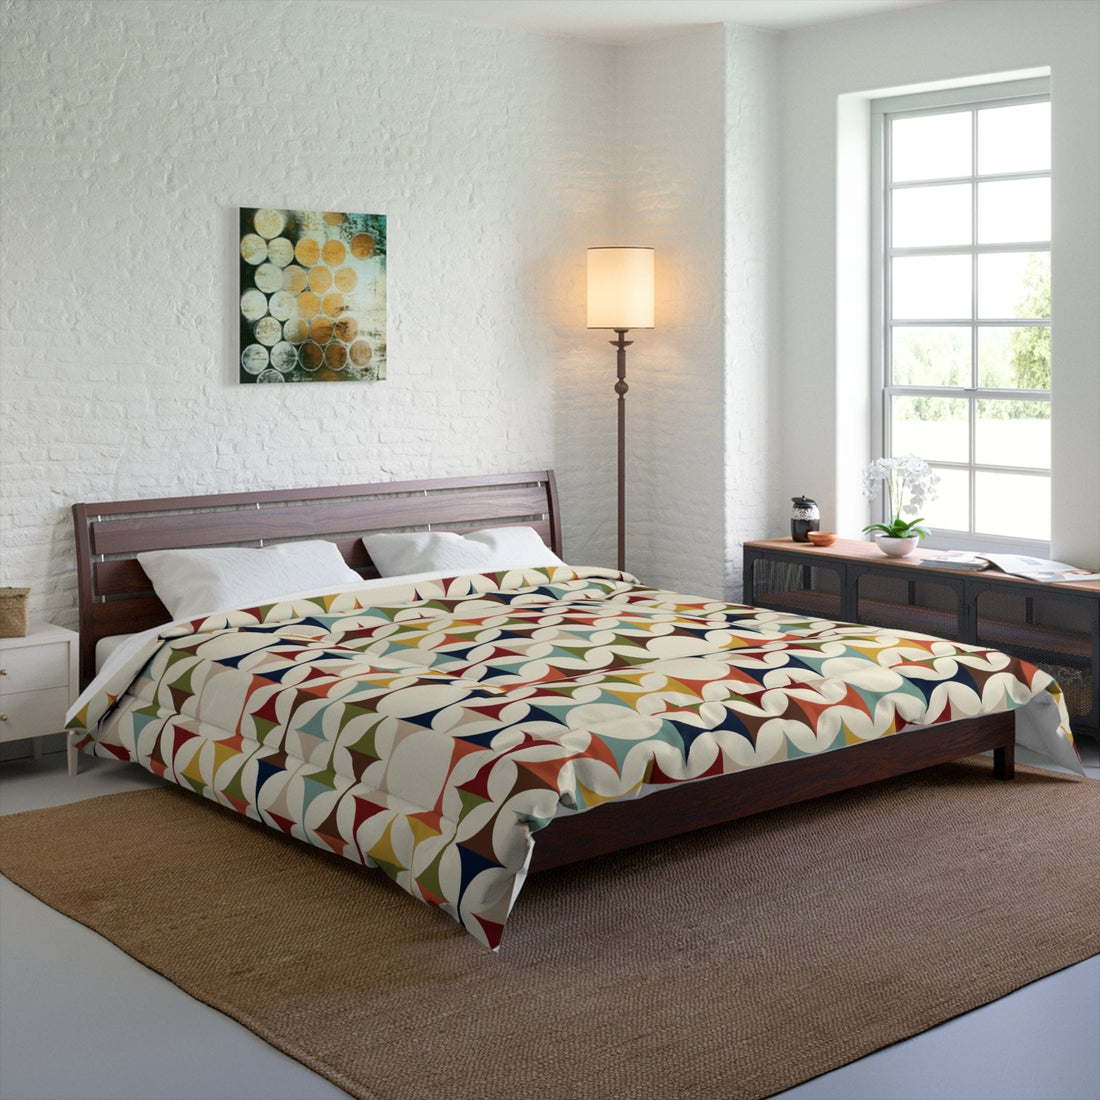 Kate McEnroe New York Retro MCM Comforter, Mid Century Modern Bedding, Vibrant Geometric Scandinavian Modern Danish Bedroom DecorComforters32720565317412503482